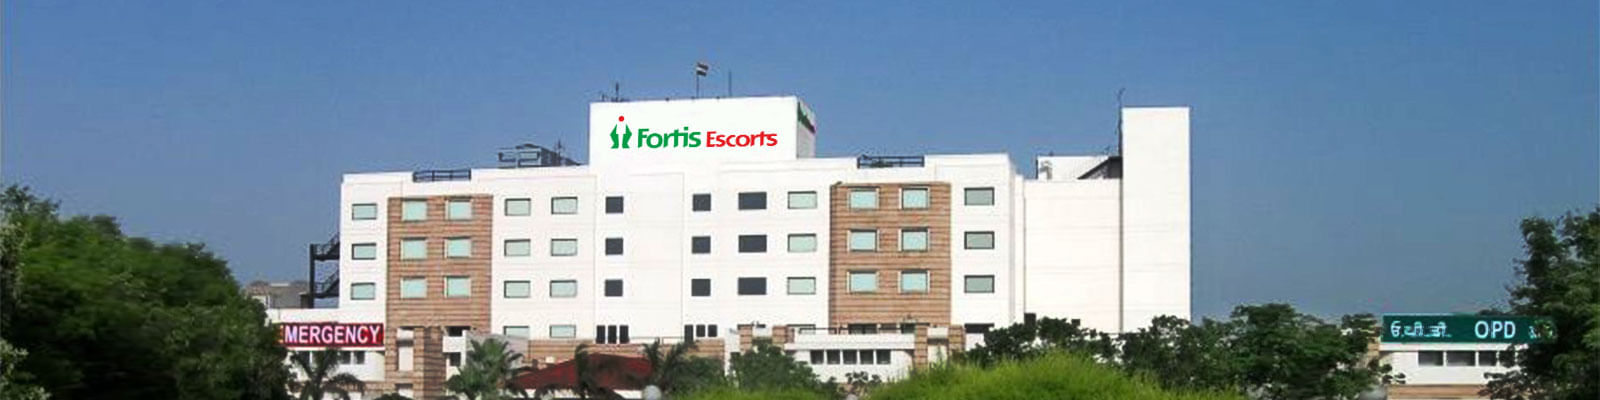 Fortis Escorts Hospital - Amritsar